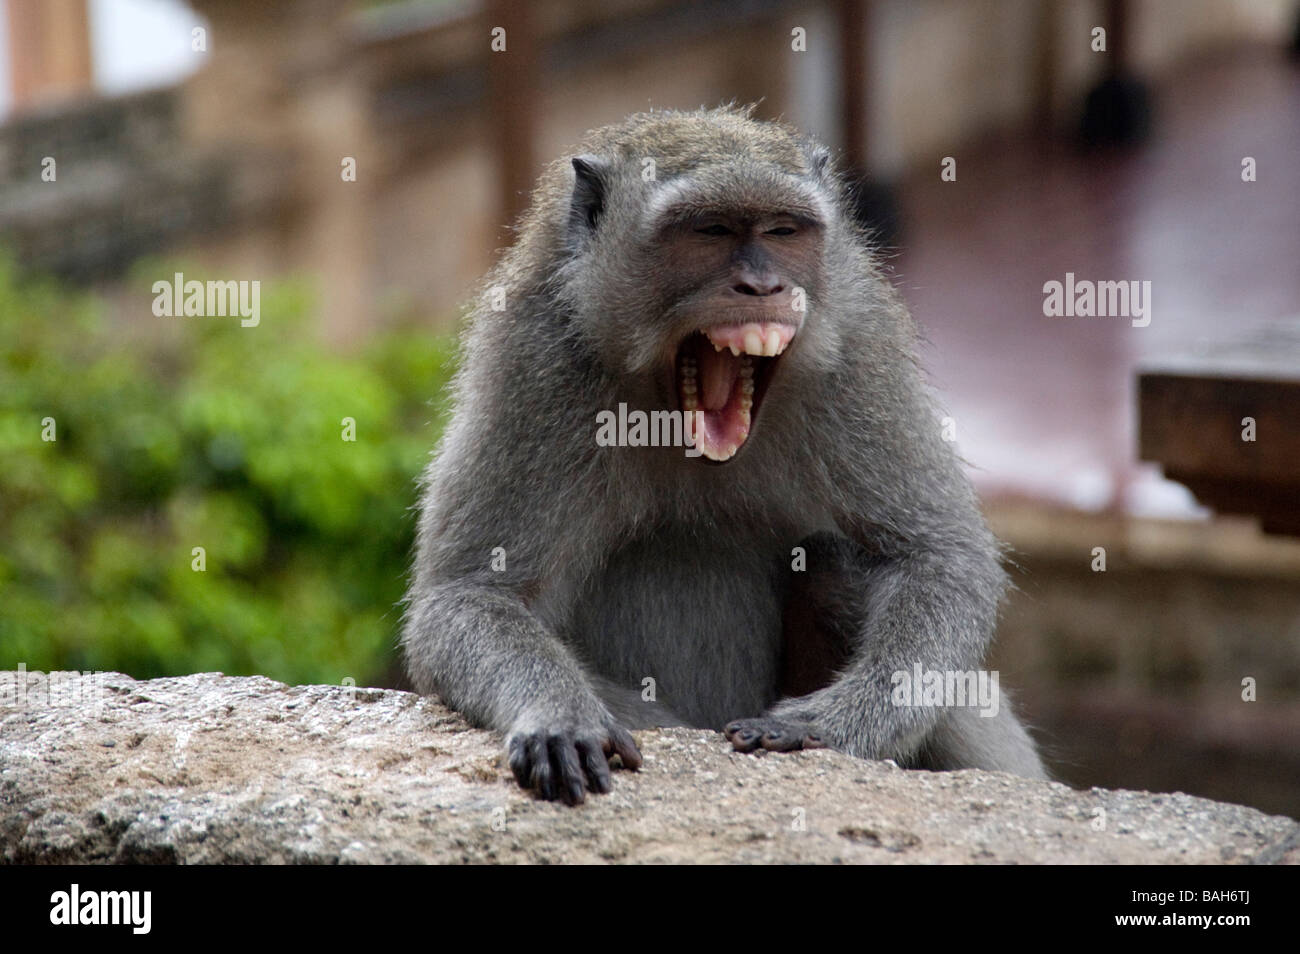 baboon screaming